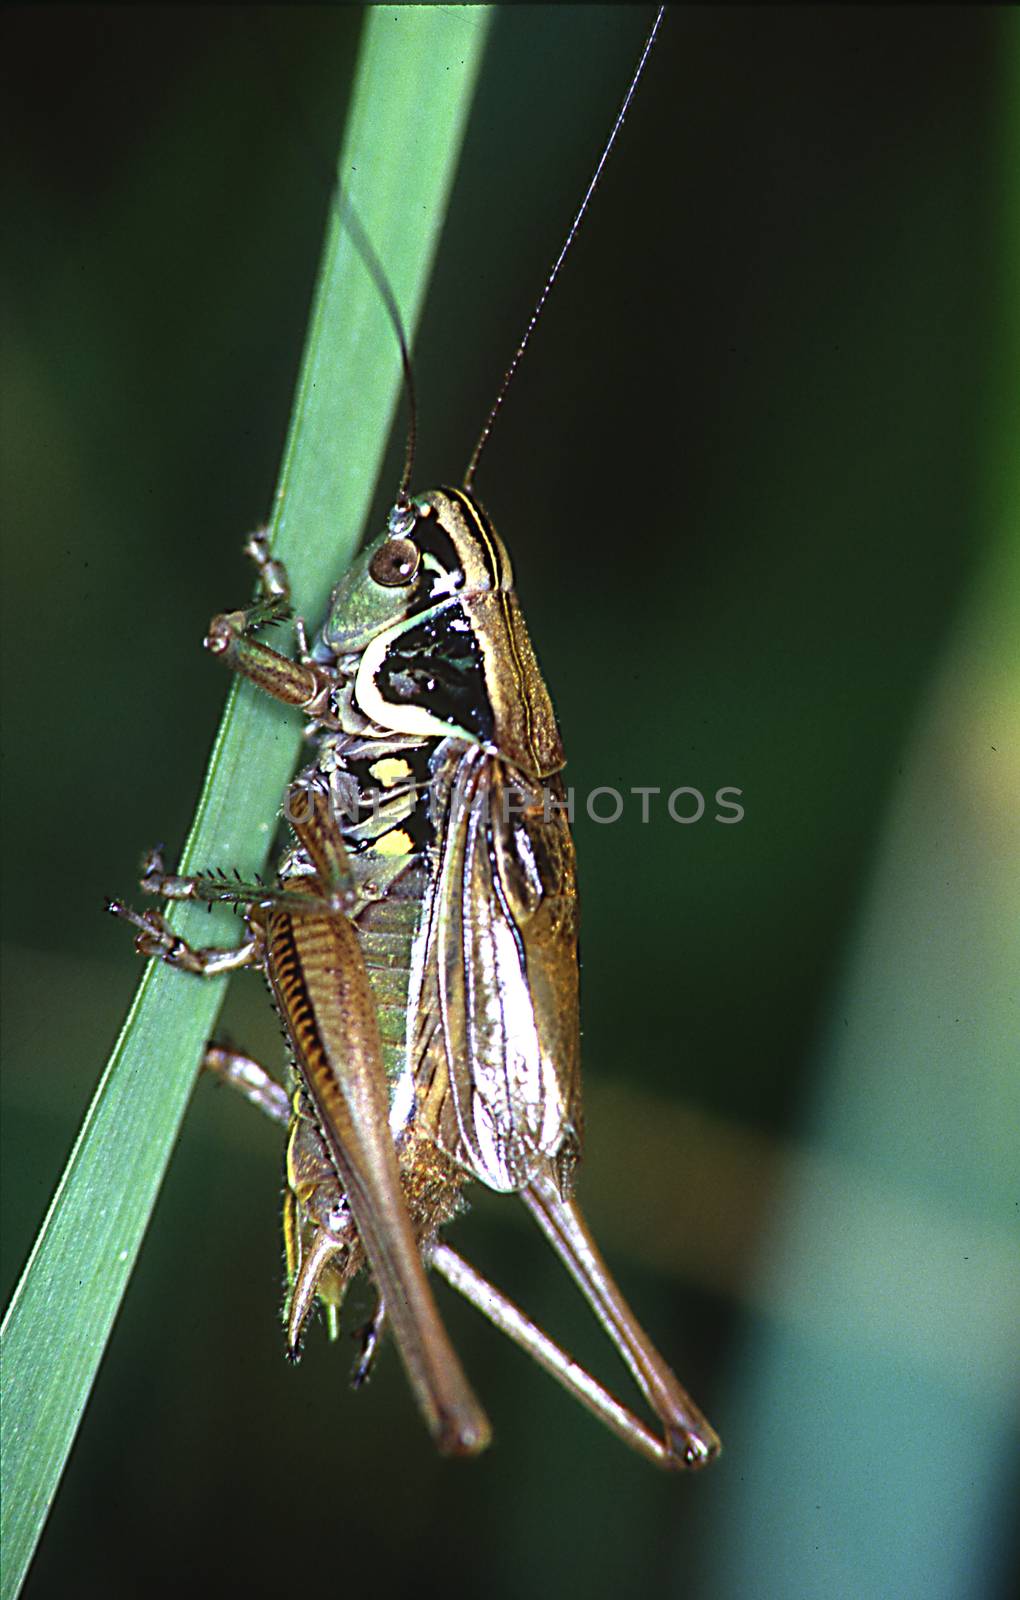 Rösel's grasshopper bite on grass by Dr-Lange